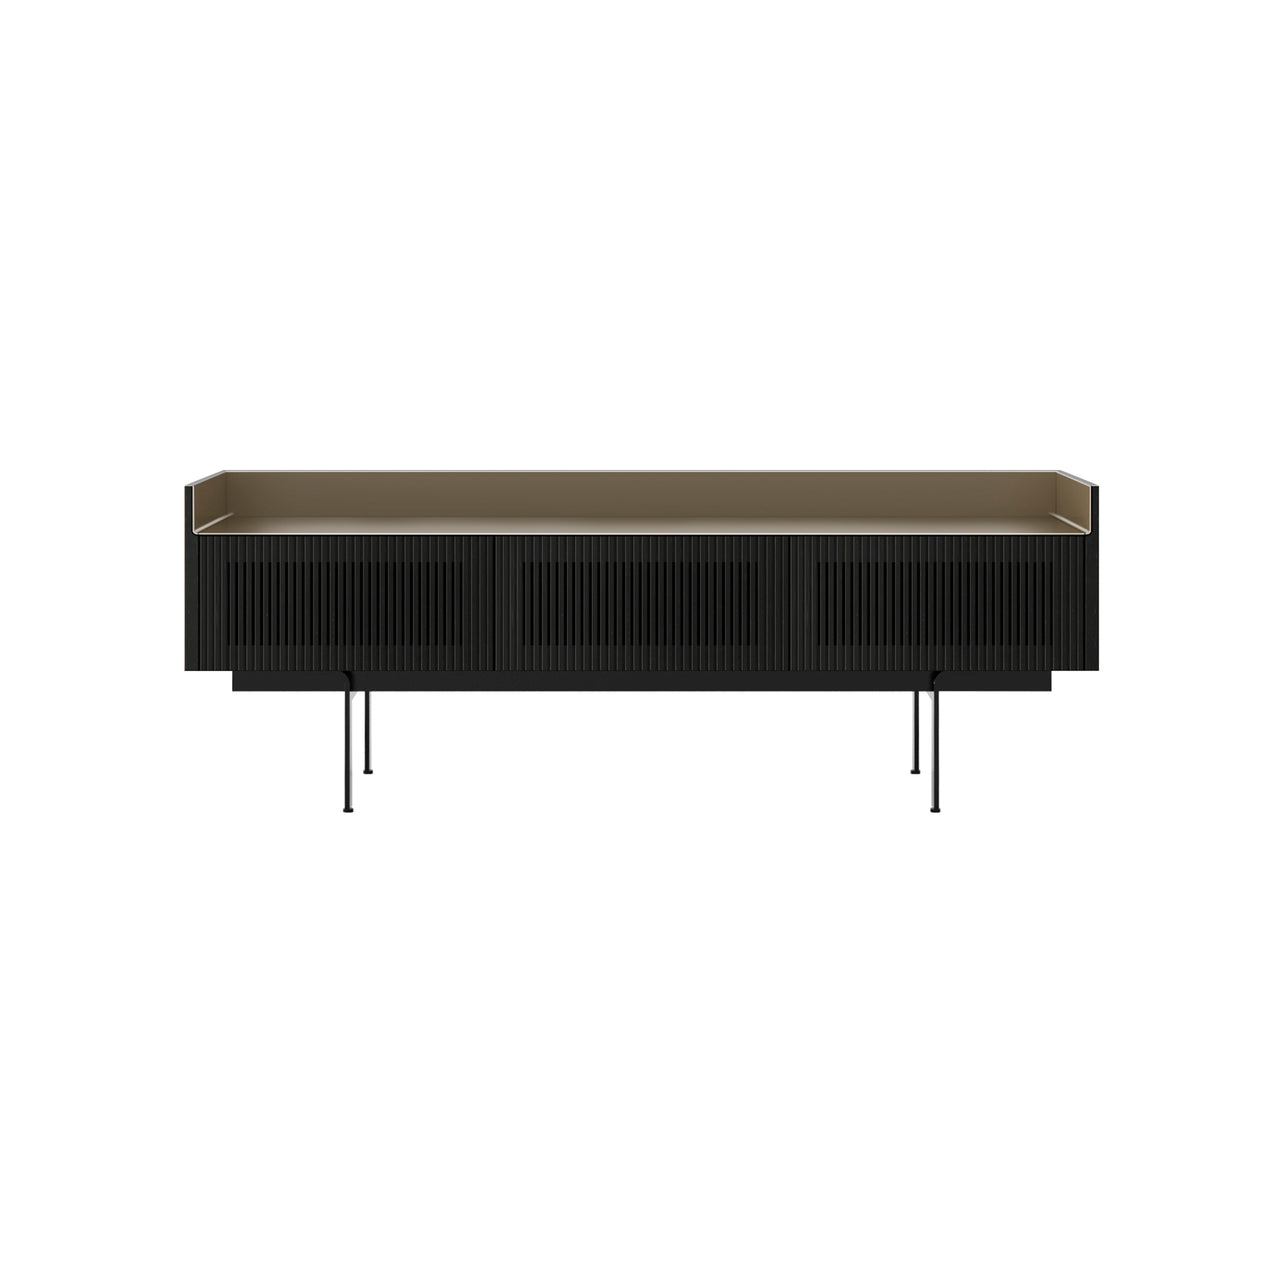 Stockholm Slim Sideboard: STH354 +Ebony Stained Oak + Anodized Aluminum Bronze + Black